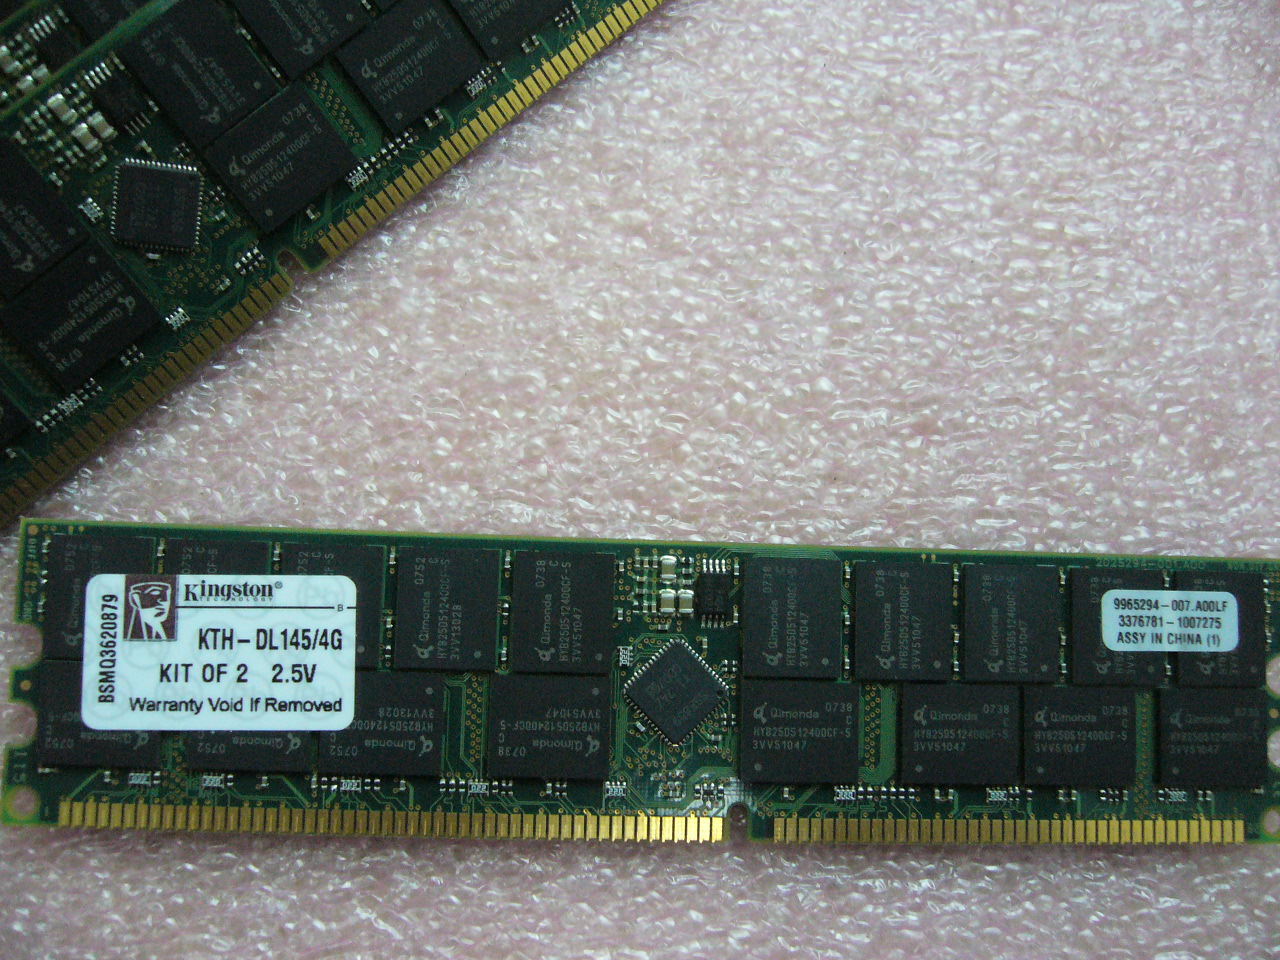 QTY 1x 2GB Module Kingston KTH-DL145/4G PC-2700R ECC Registered Server memory